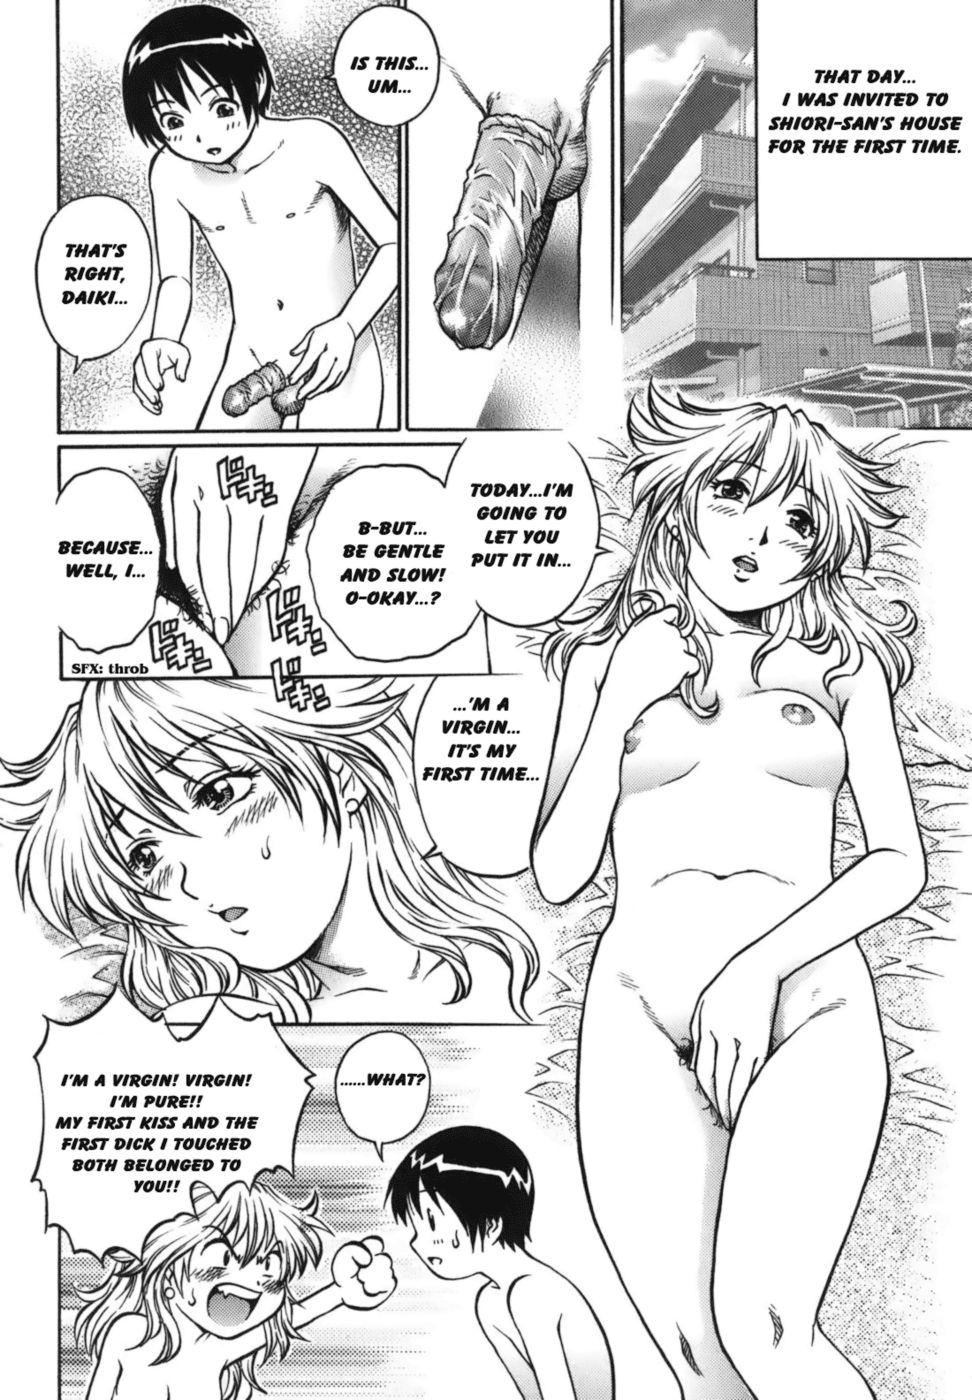 Hentai Manga Comic-Awkward Girl vs Virginal Masochist Boy-Read-14